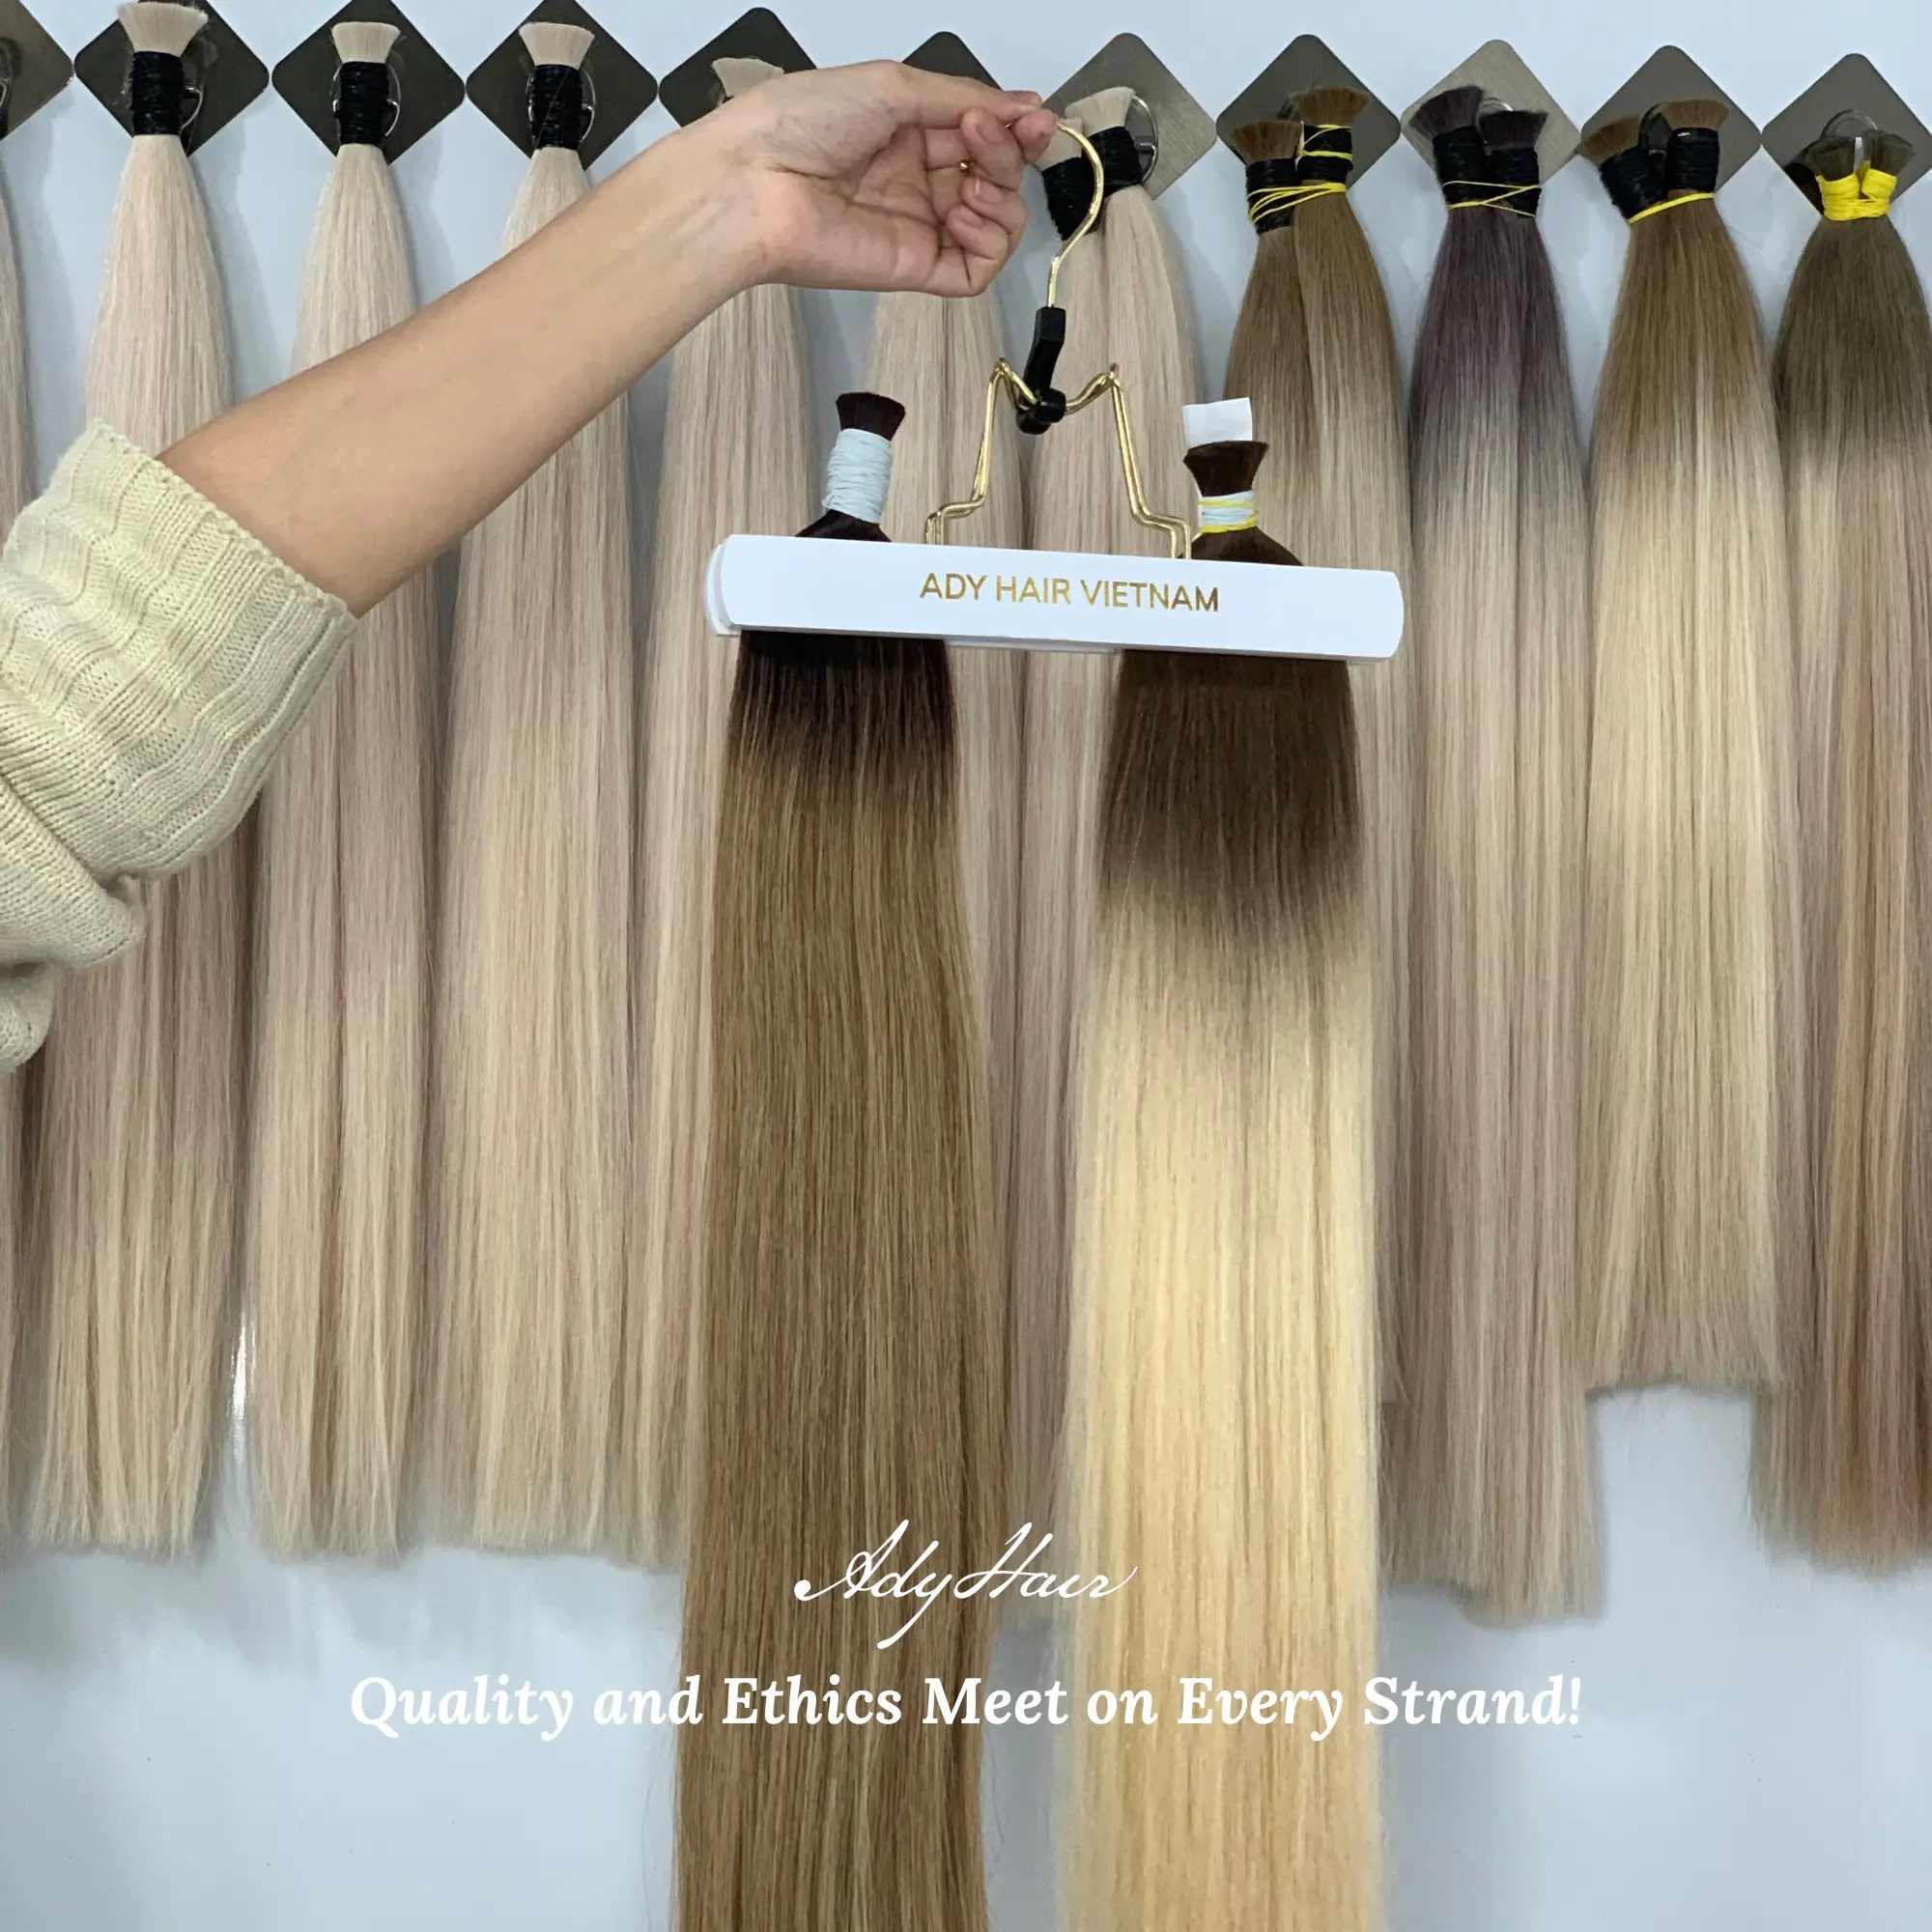 BULK Vietnamese Human Hair Extensions ADY Factory Manufacturer unprocessed 100% natural hair wholesale price light colors